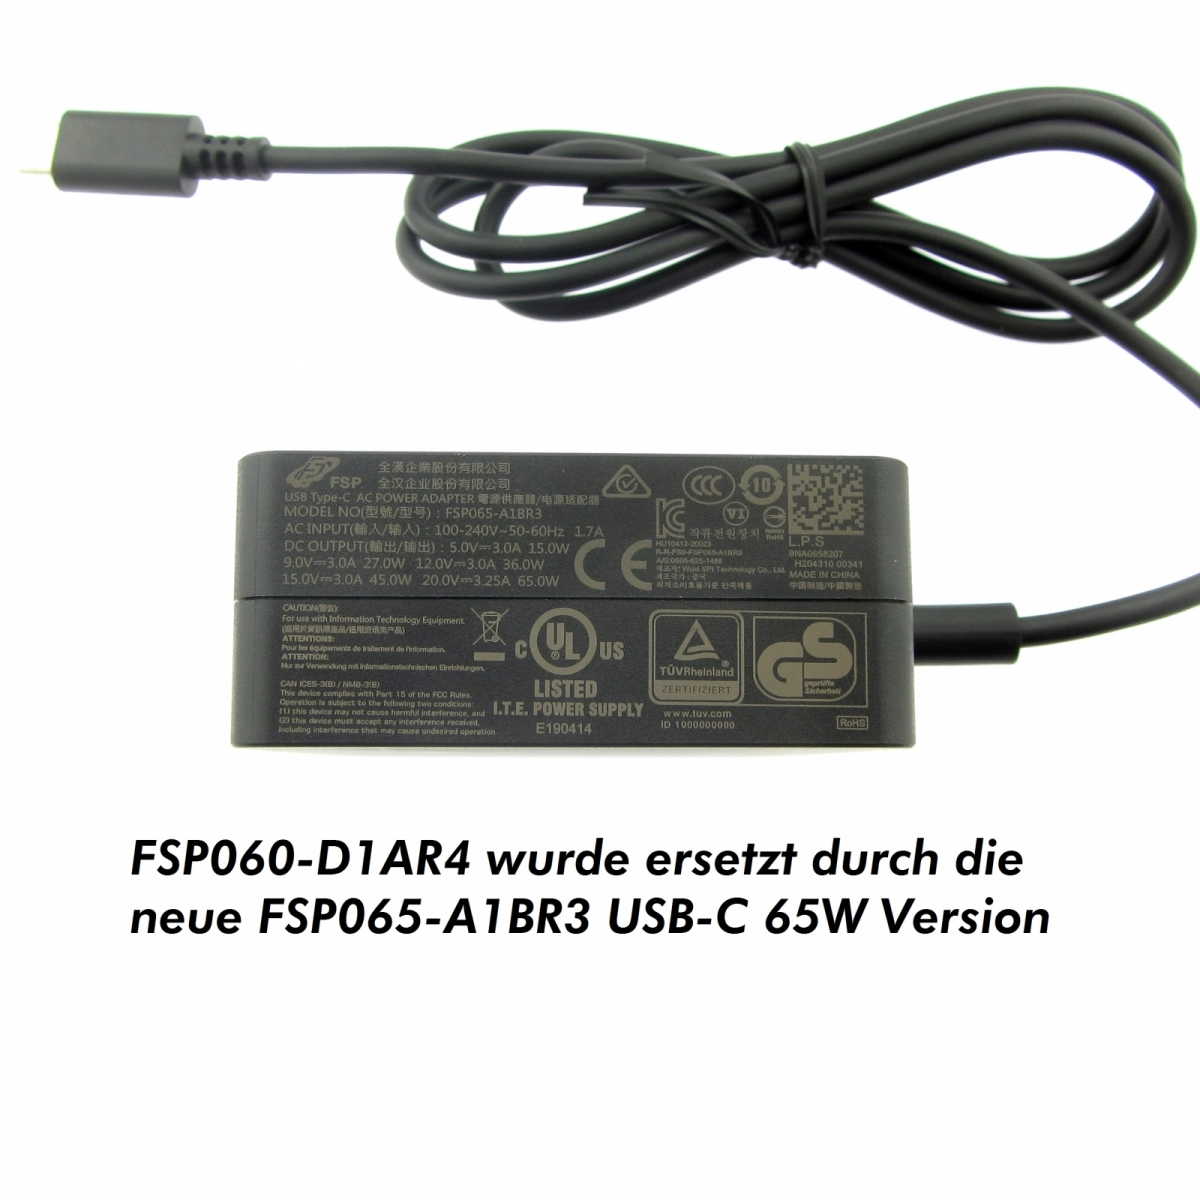 FSP Original Netzteil Typ 9NA0606000, 20V, 3.0A, Stecker USB-C, EU-Version